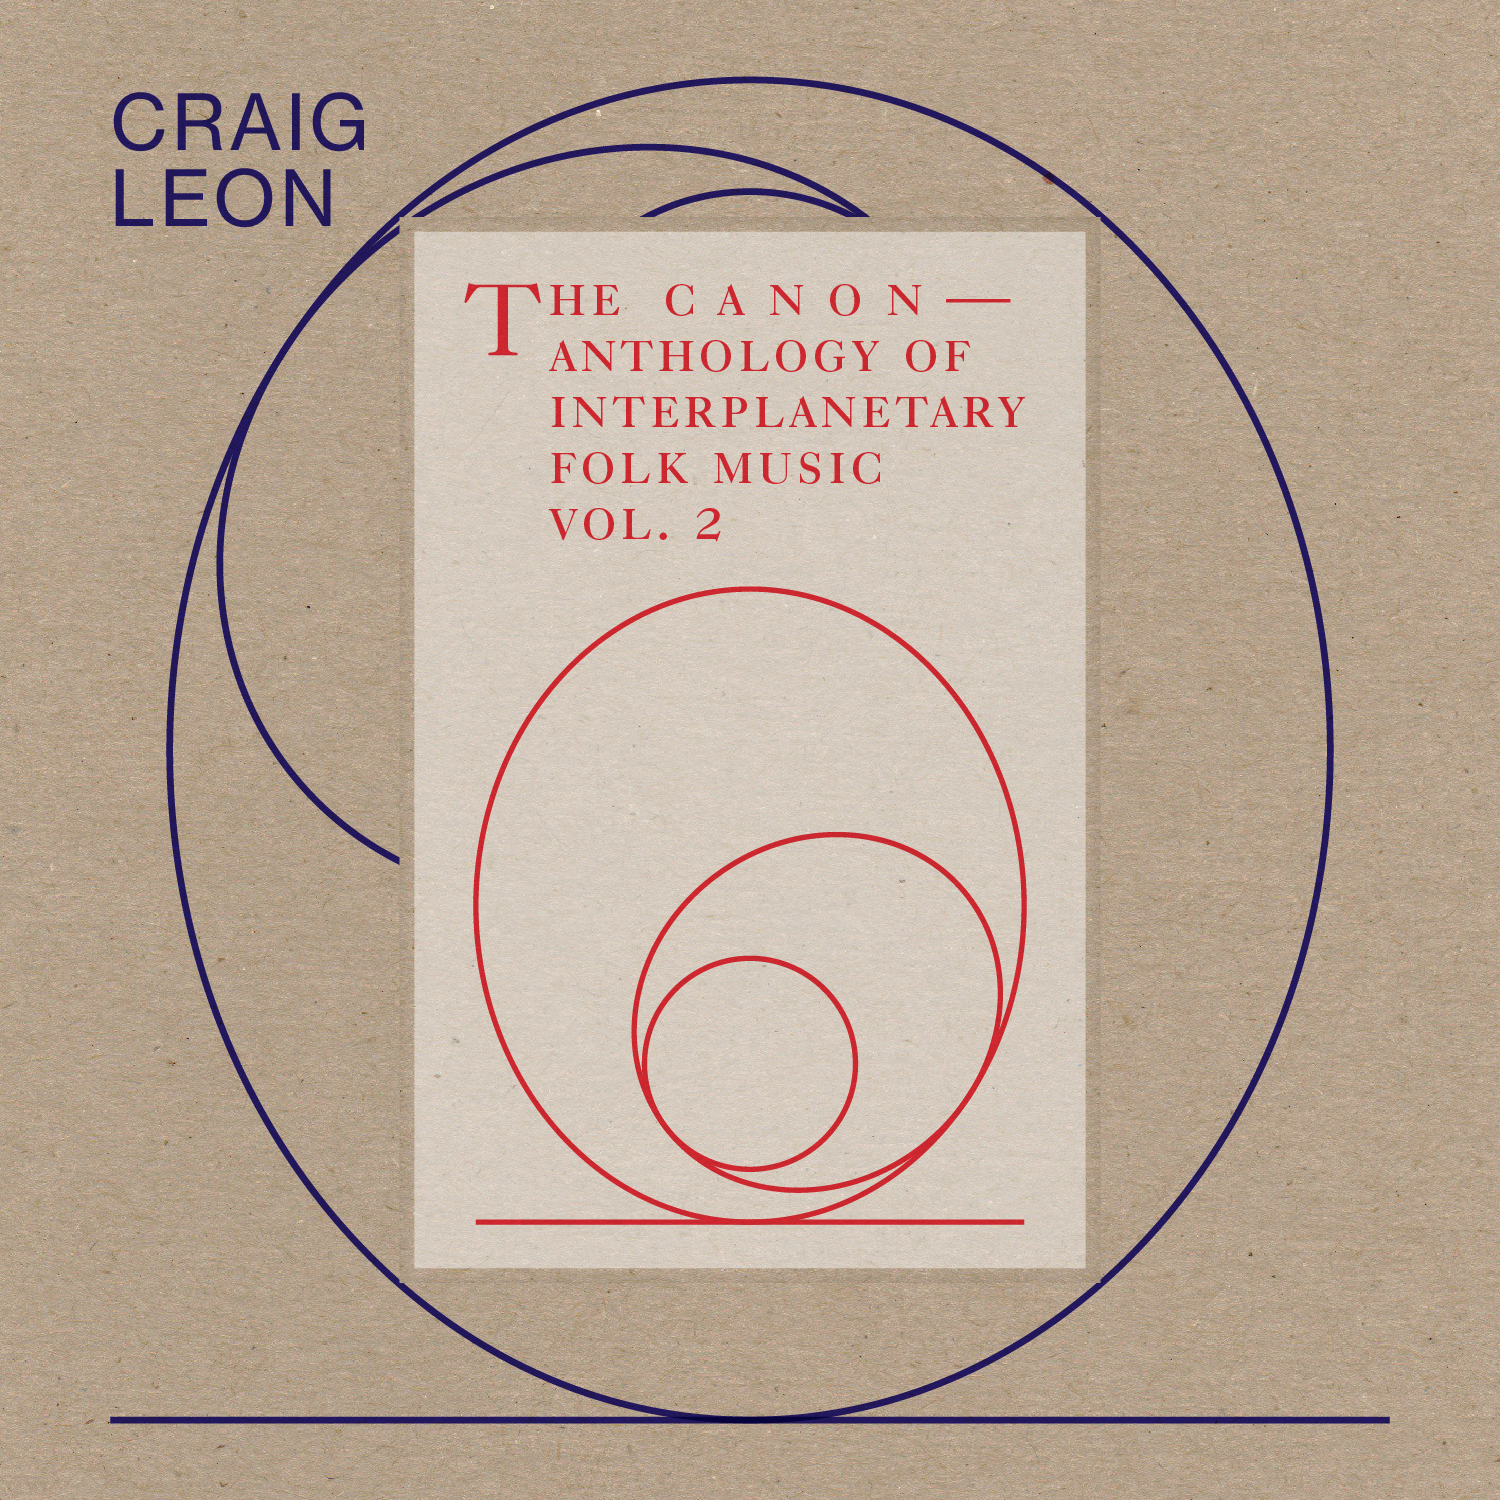 Image for Craig Leon – Anthology of Interplanetary Folk Music Vol. 2: The Canon